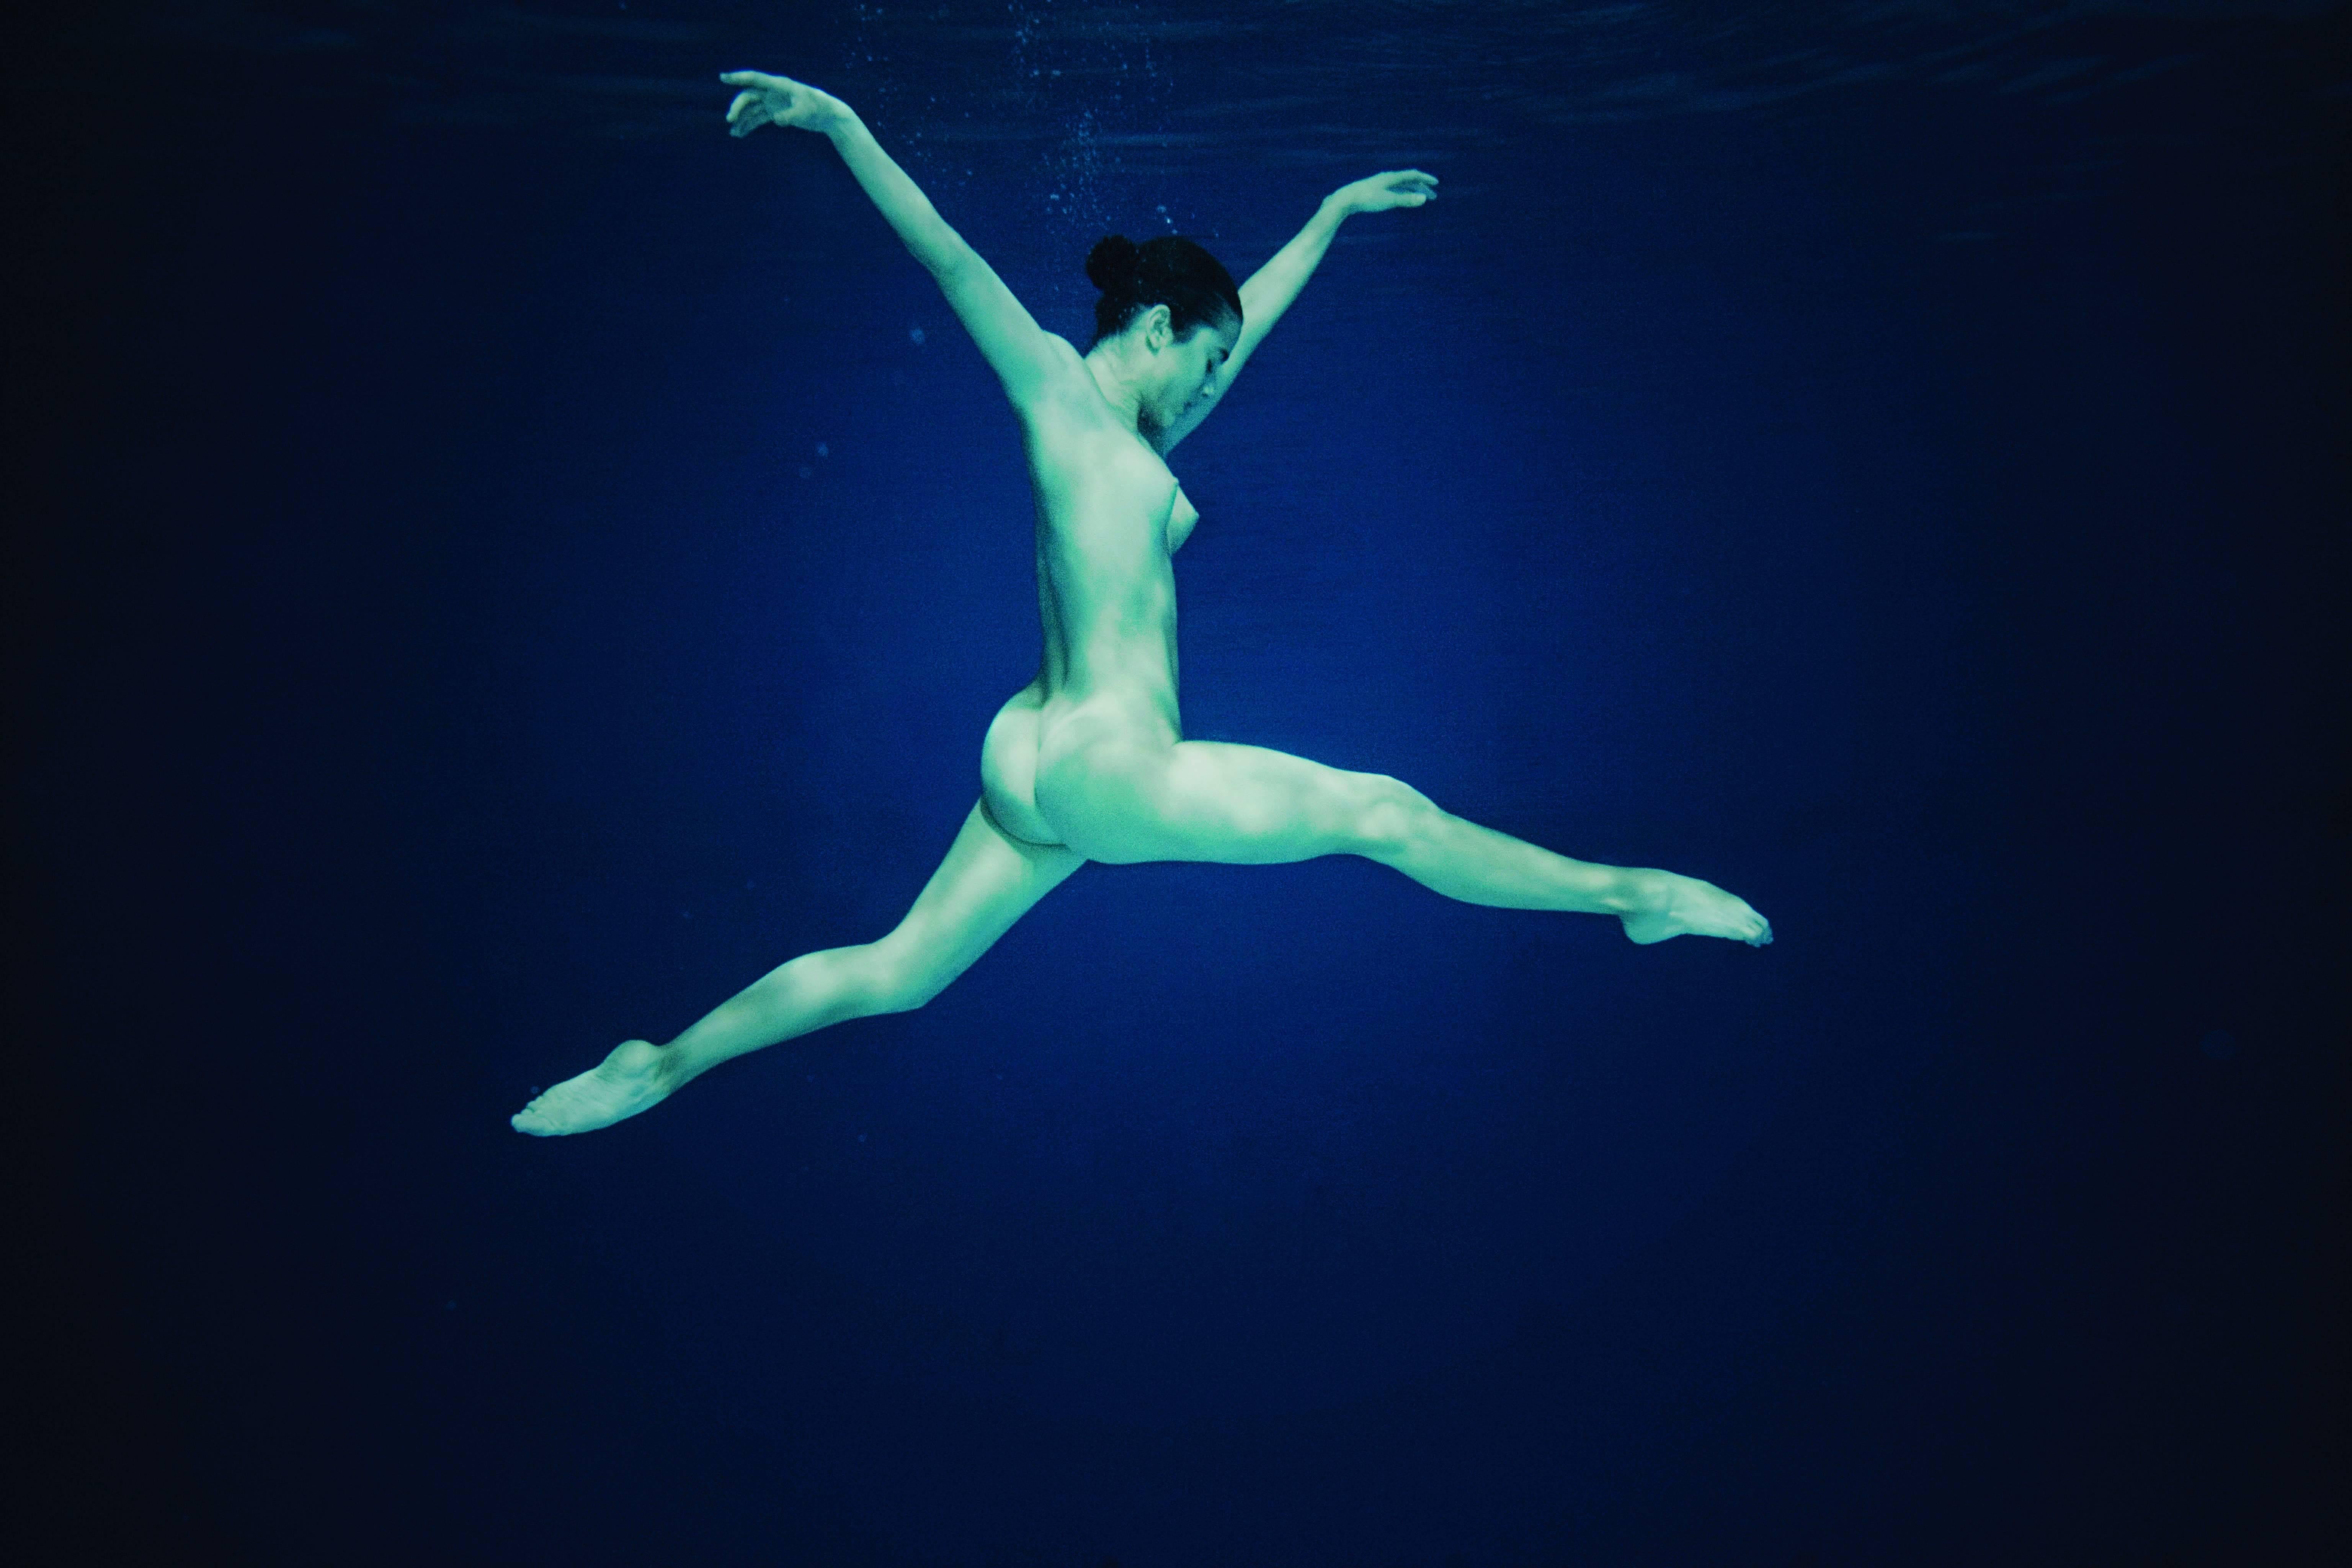 Mauricio Velez Nude Photograph -  Half Angels Half Demons #8, Underwater nude limited edition color photograph